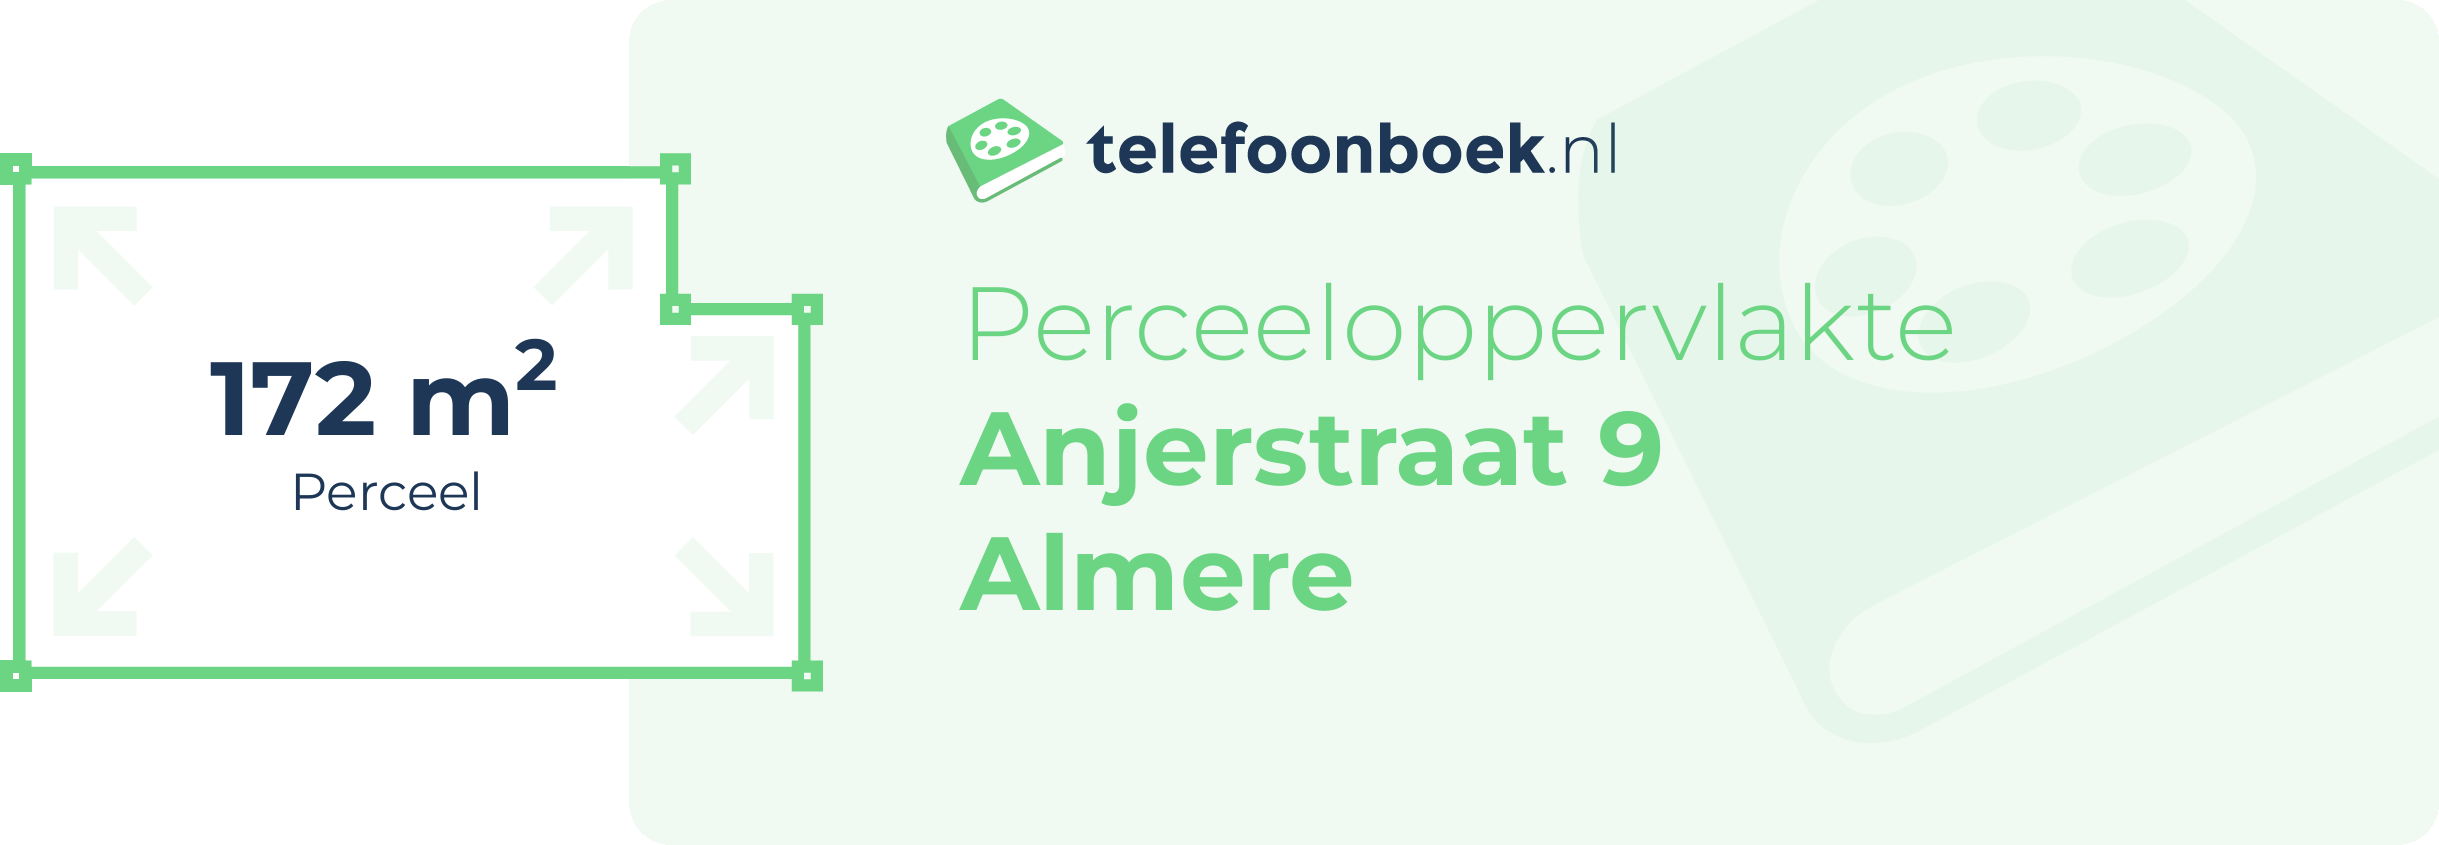 Perceeloppervlakte Anjerstraat 9 Almere